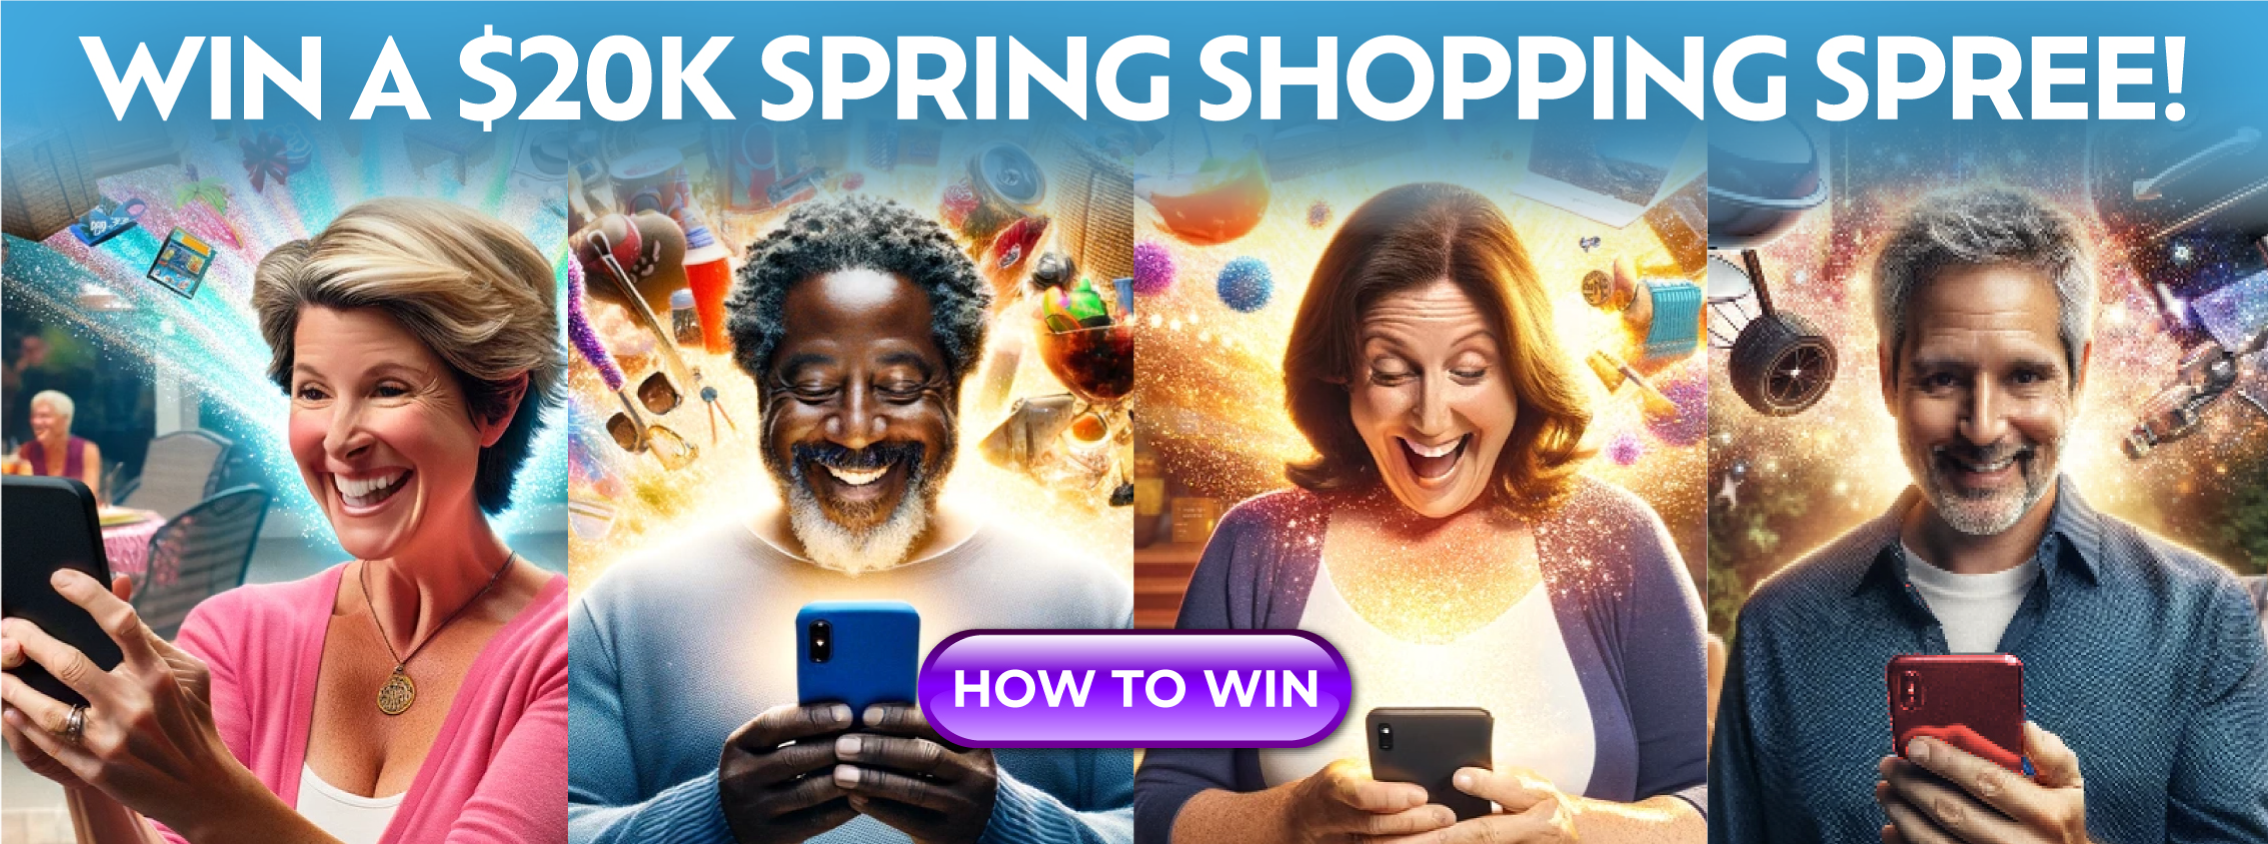 Win a $20K Spring Shopping Spree!